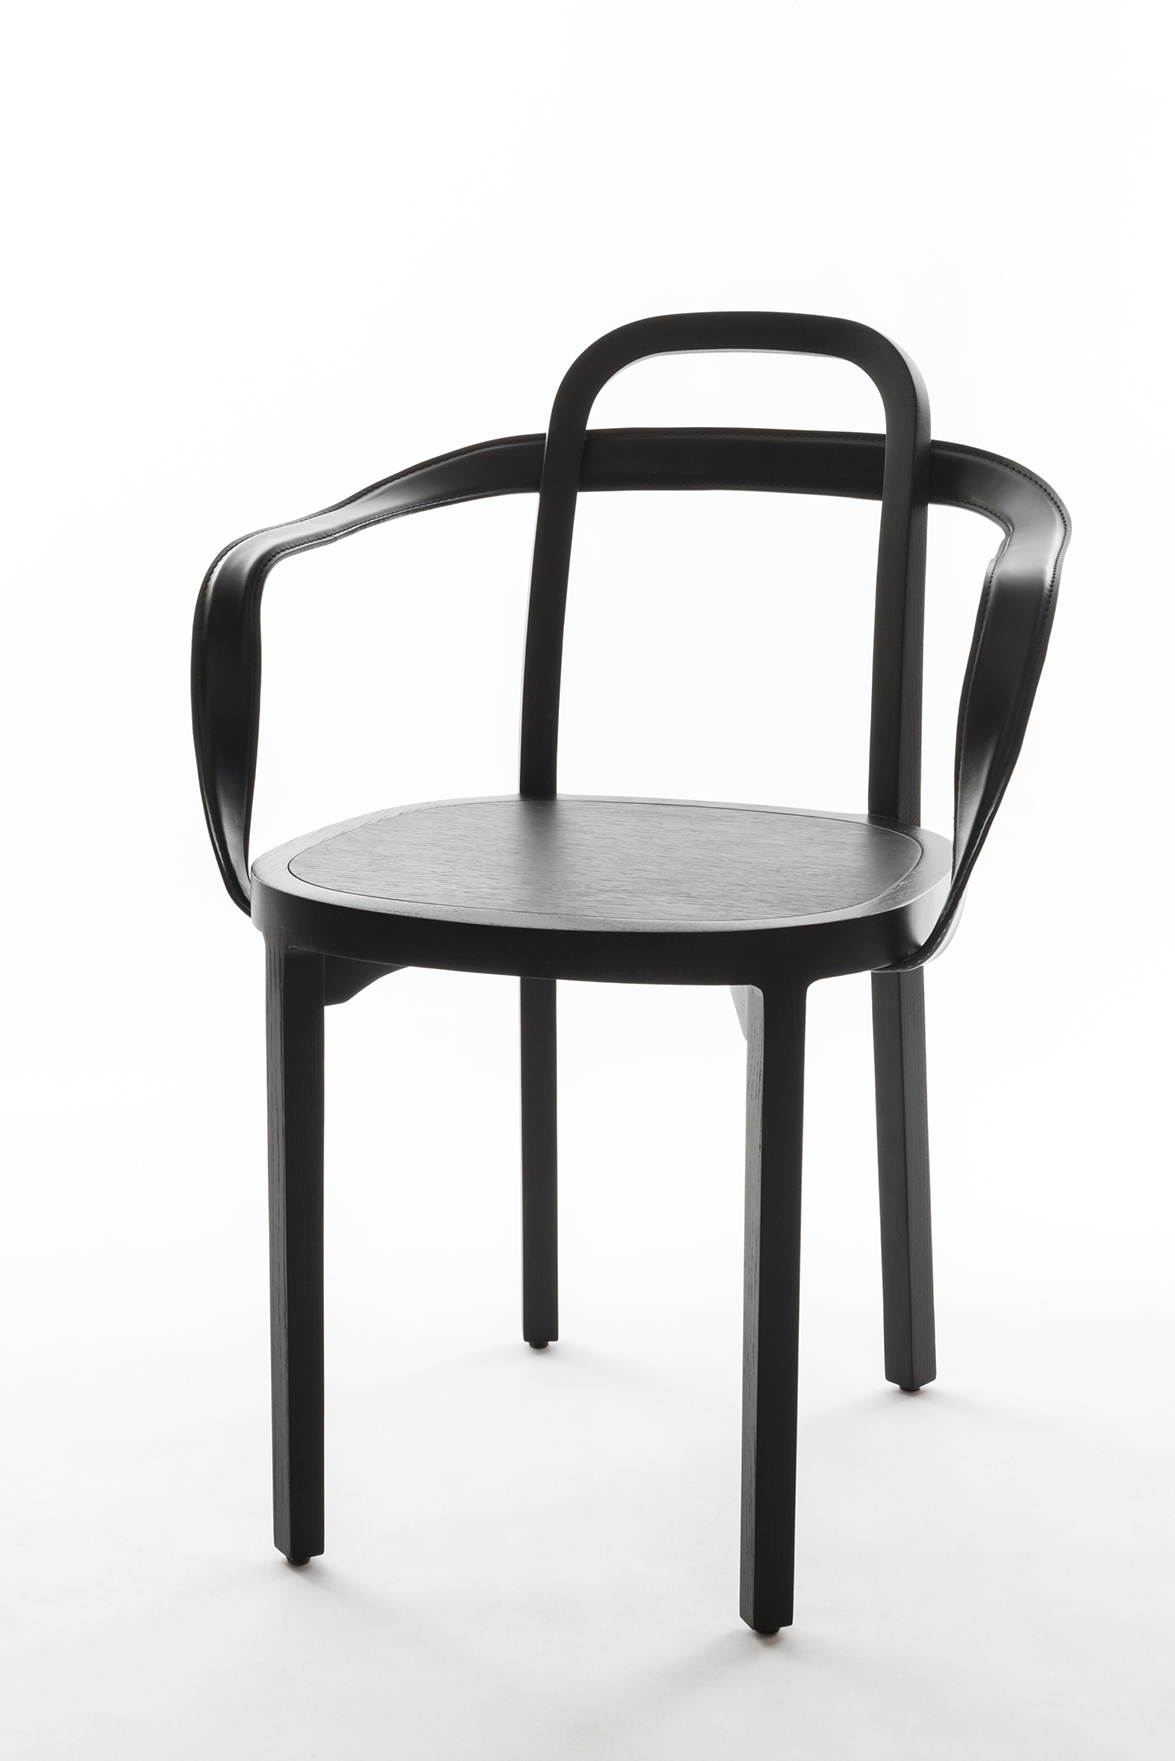 Siro chair by Suppanen+Mangiarotti by Woodnotes_ph credits Federico Villa_black (2)